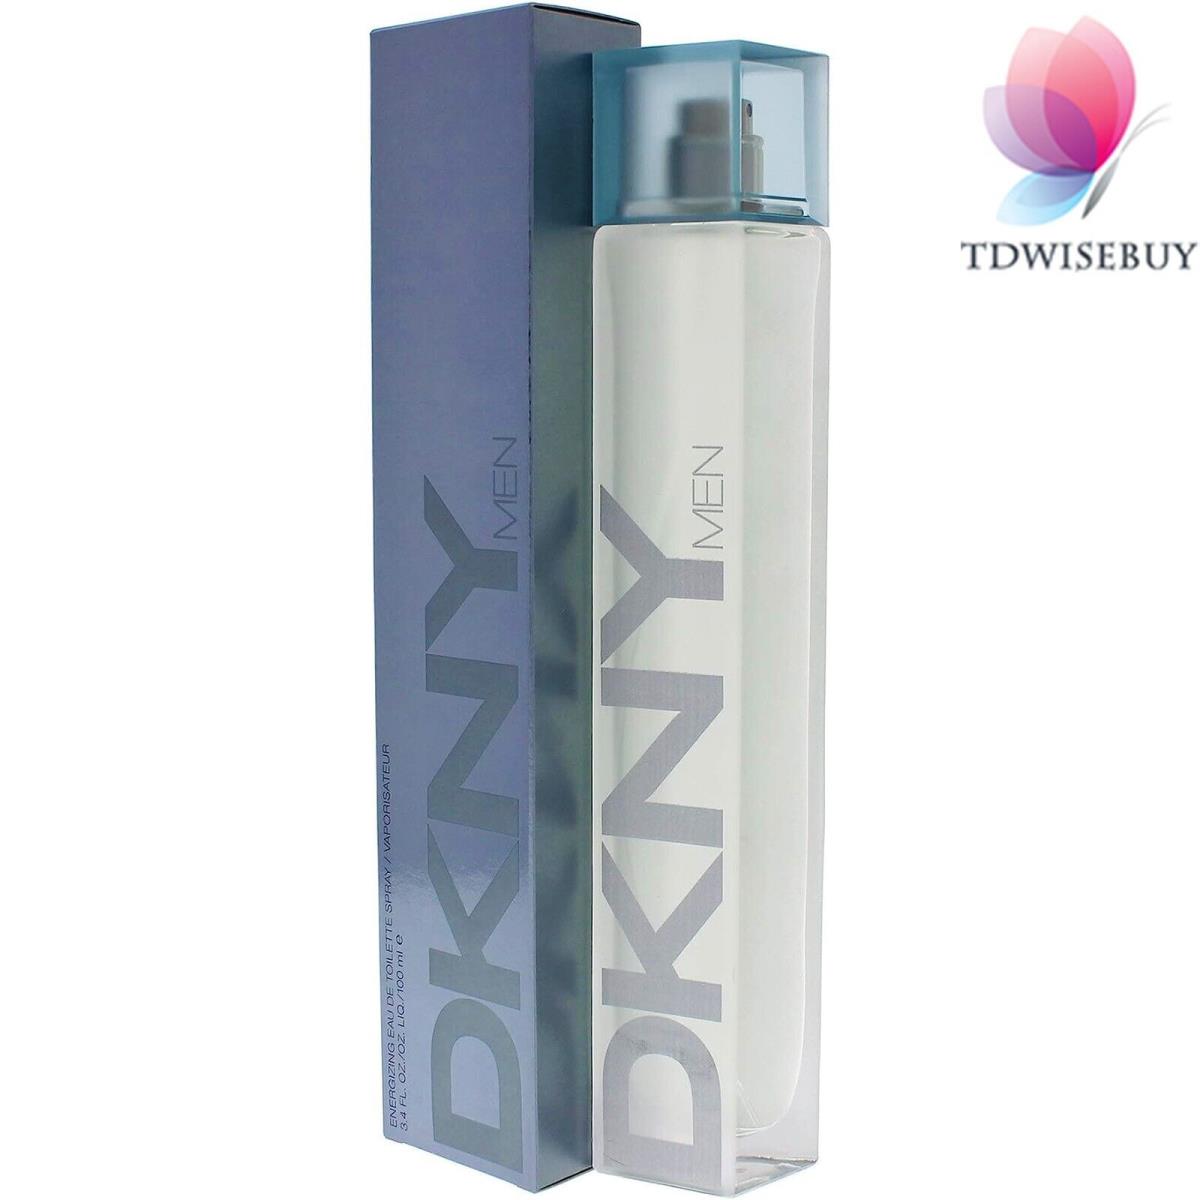 Dkny Cologne Men Perfume by Donna Karan Eau De Toilette Spray 3.4 oz 100 ml Edt